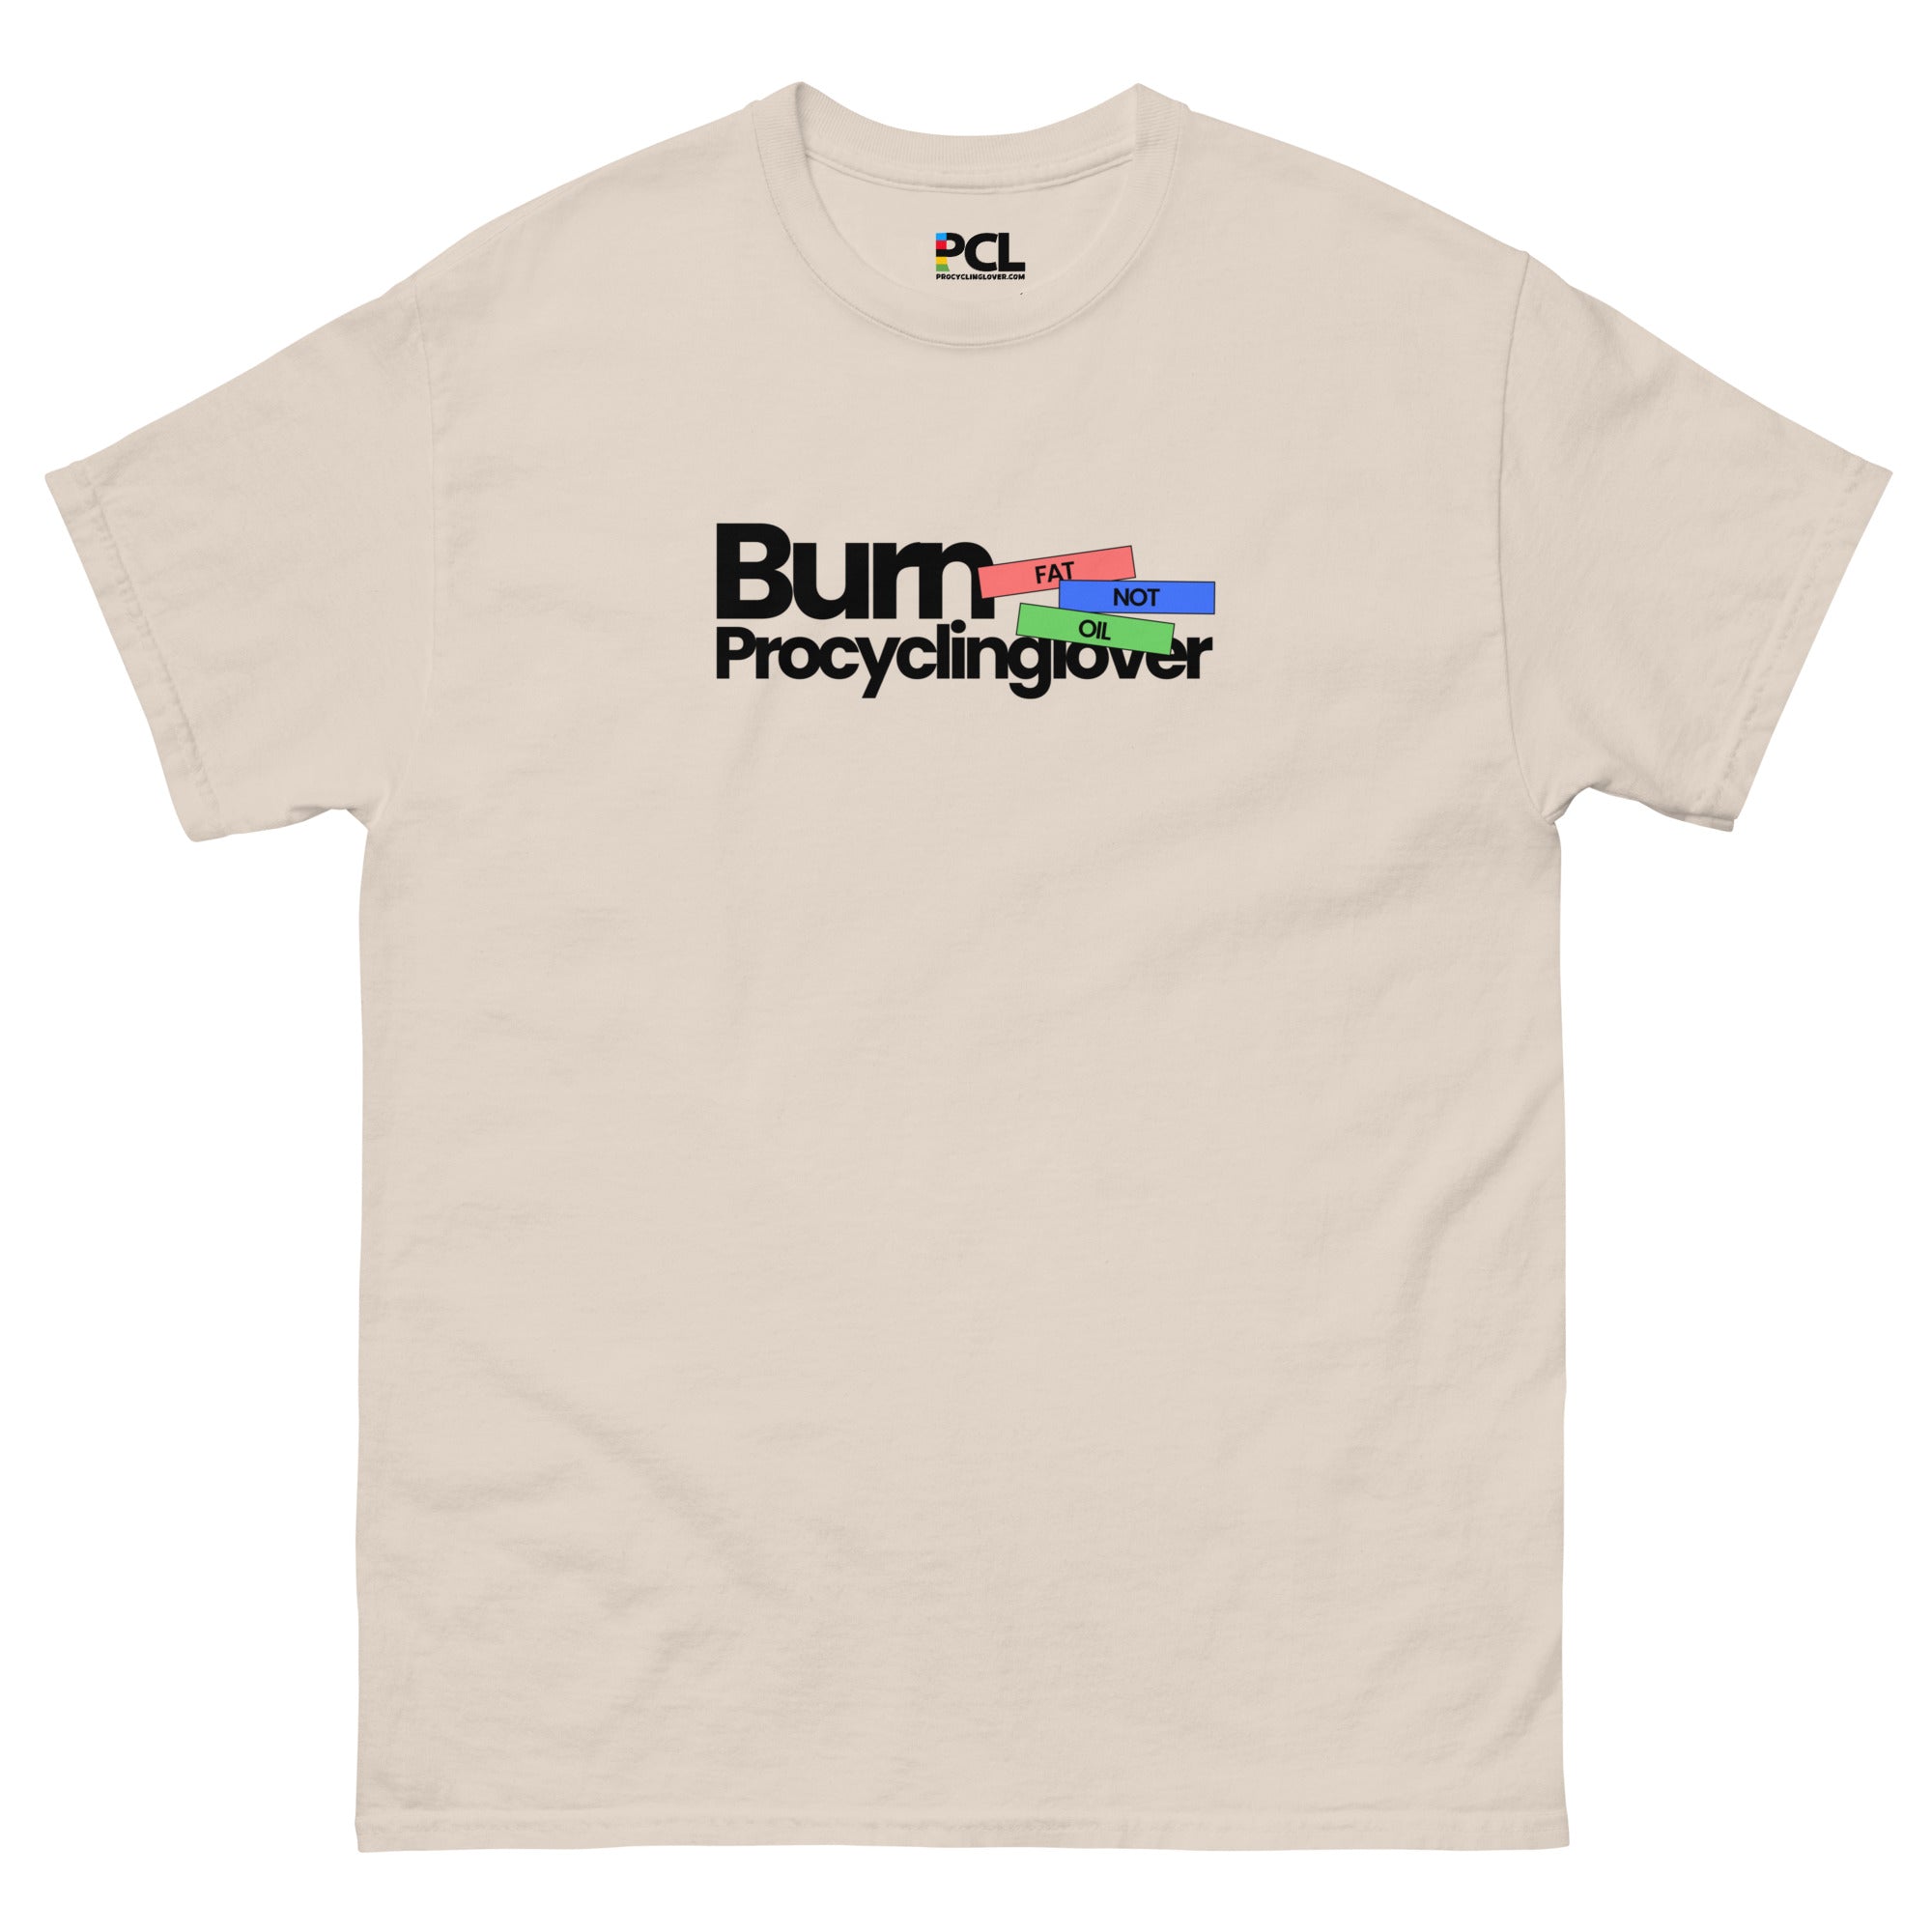 Burn Fat Not Oil Unisex T-Shirt